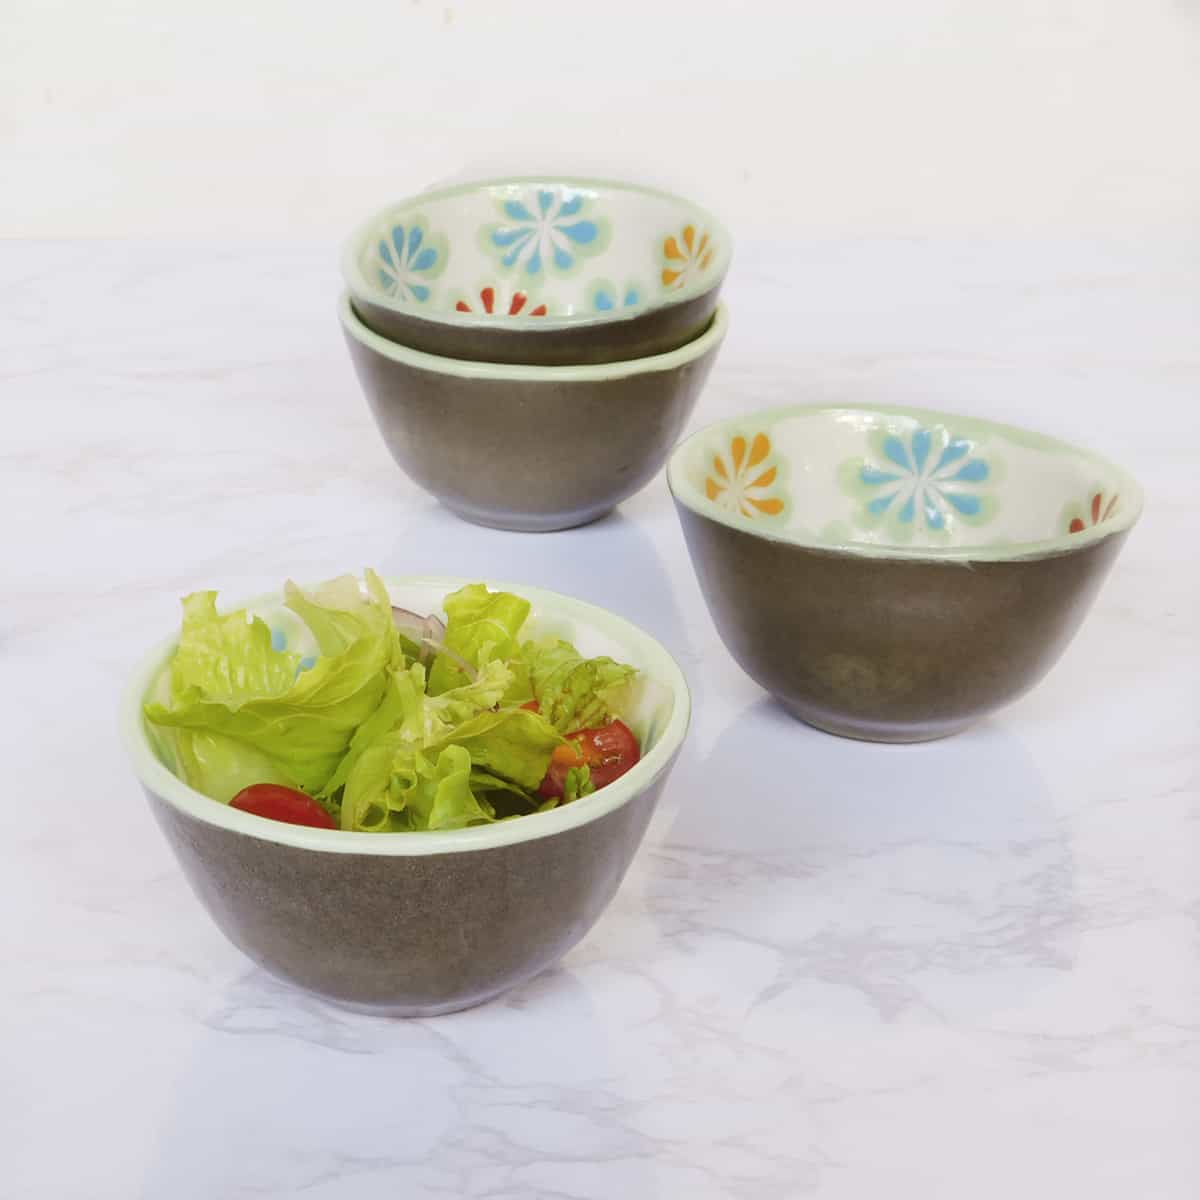 Handmade Ceramic Bowls Green Floral Design Set of 4 - Small